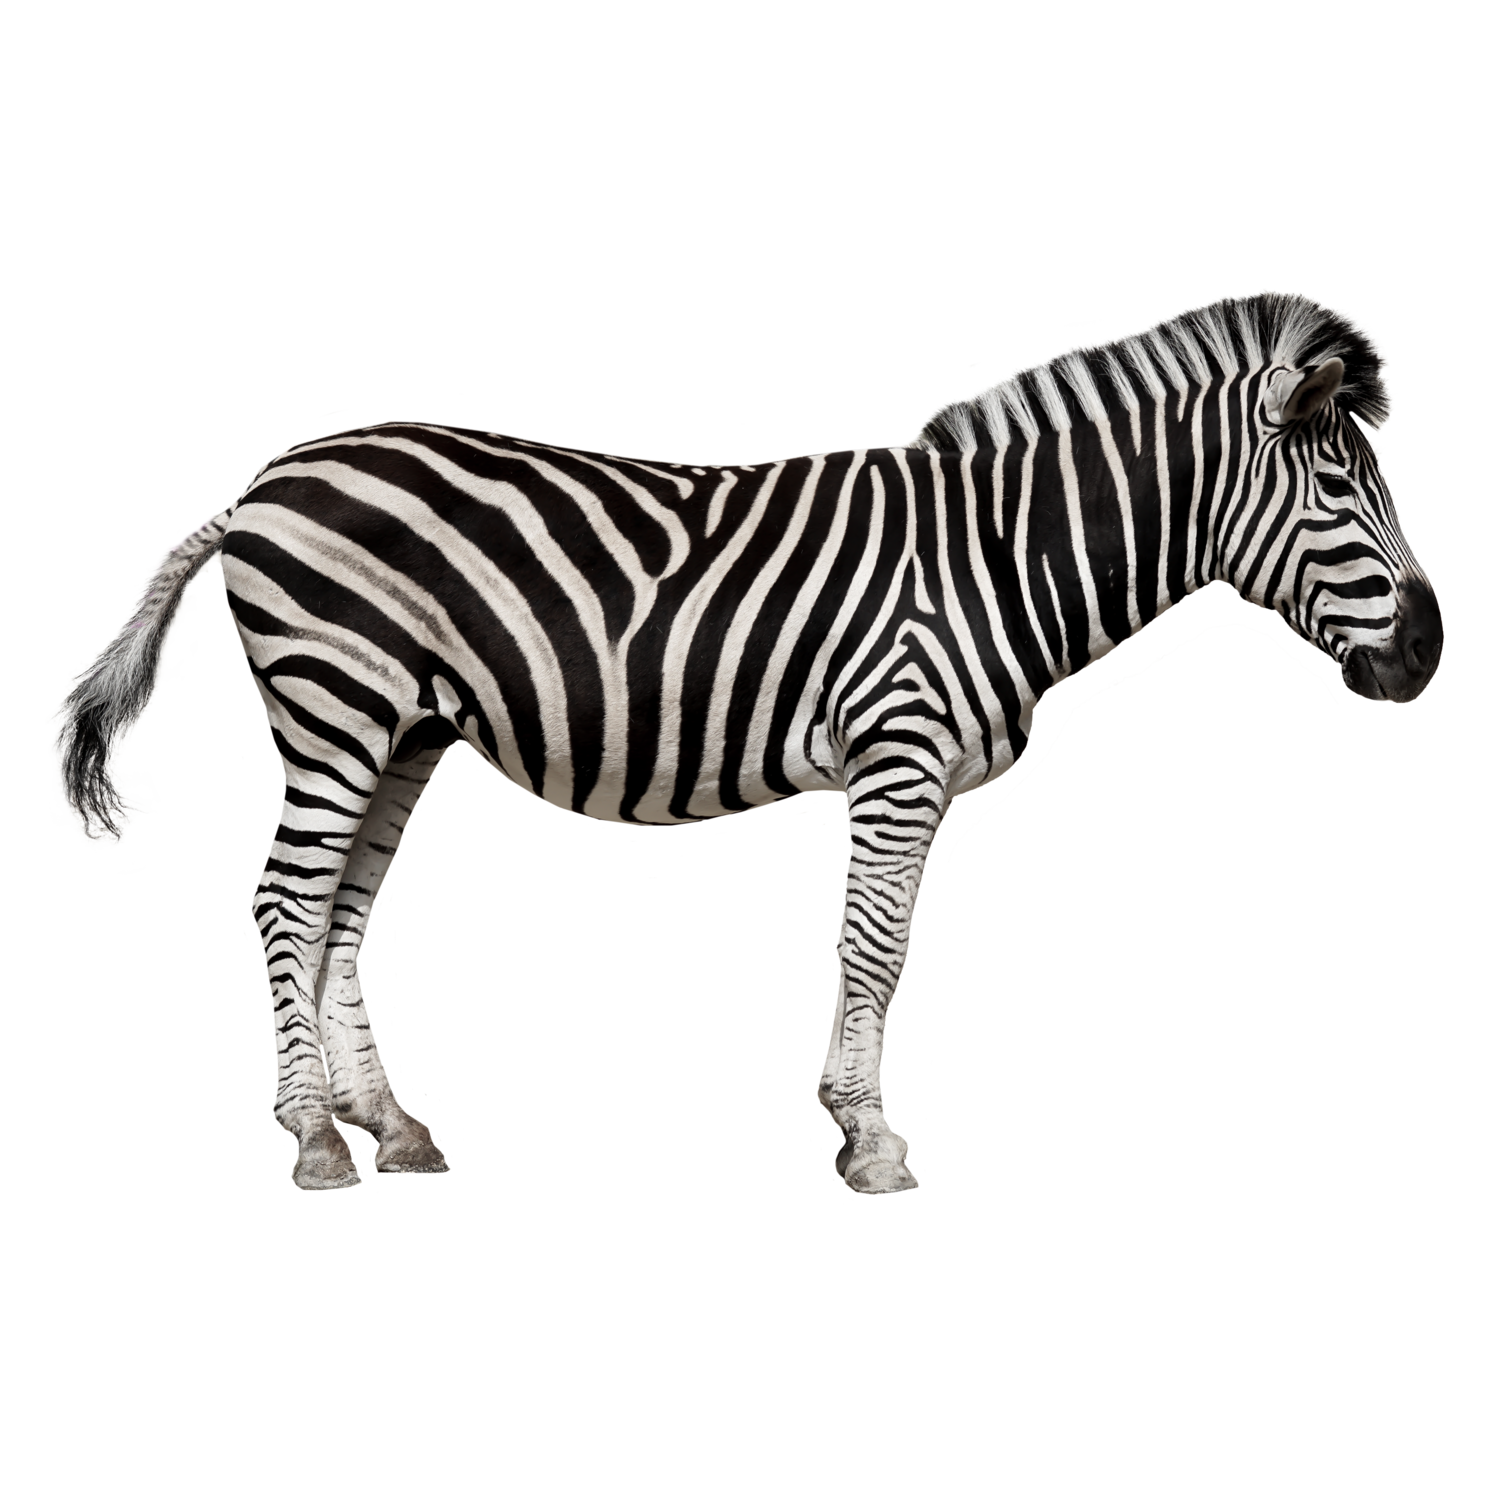 Download PNG image - Zebra PNG Image HD 